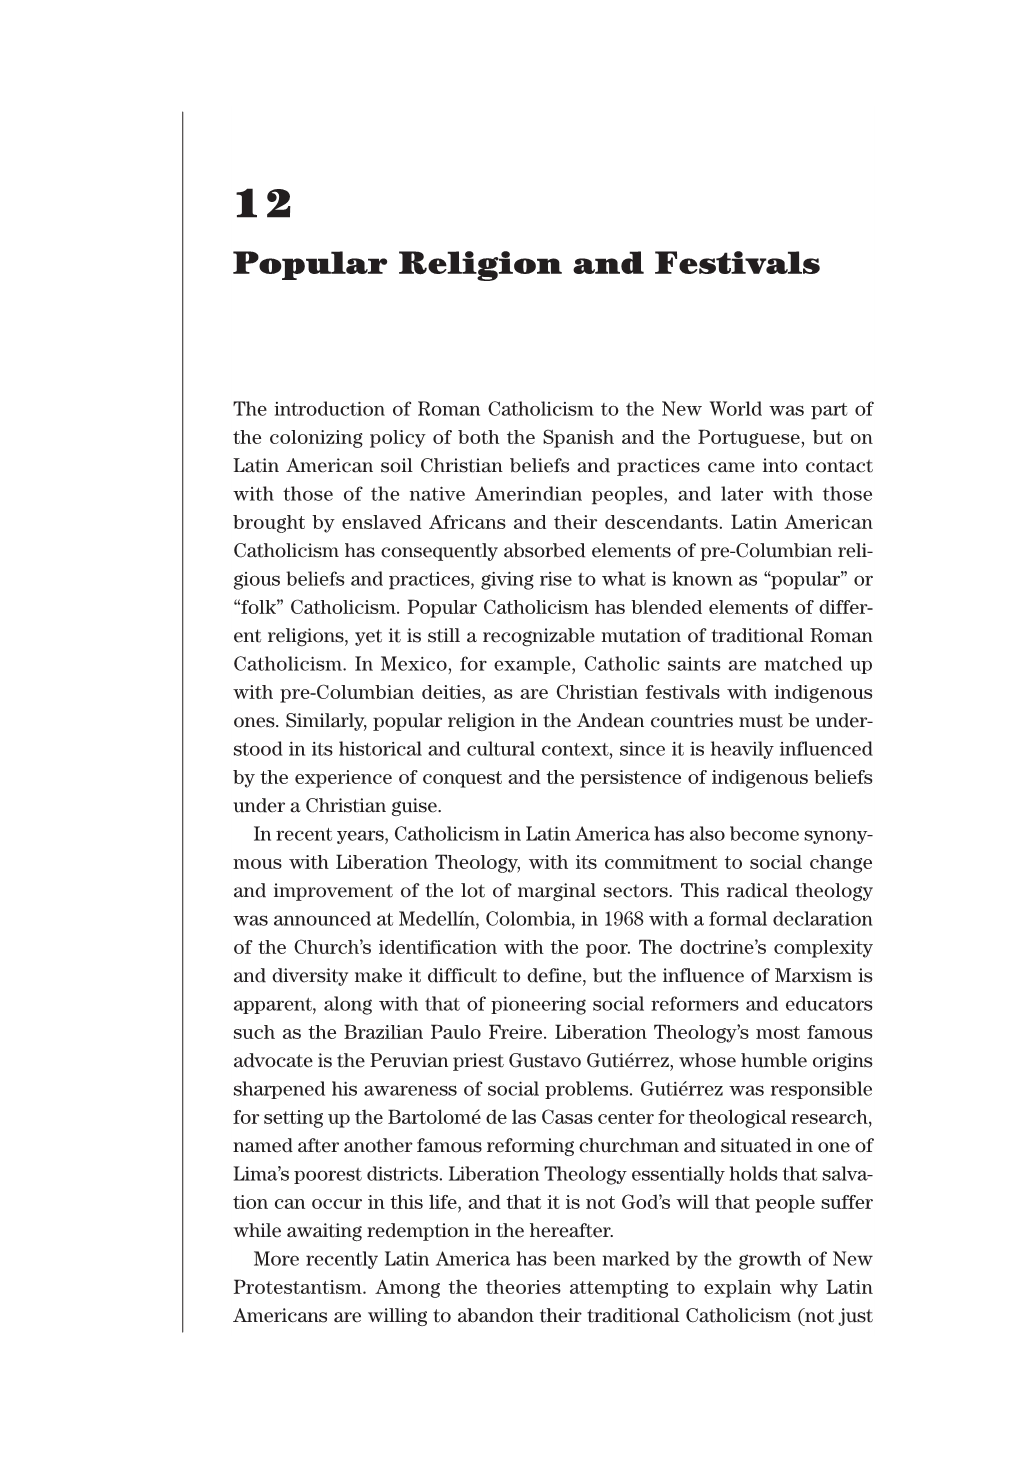 Popular Religion and Festivals